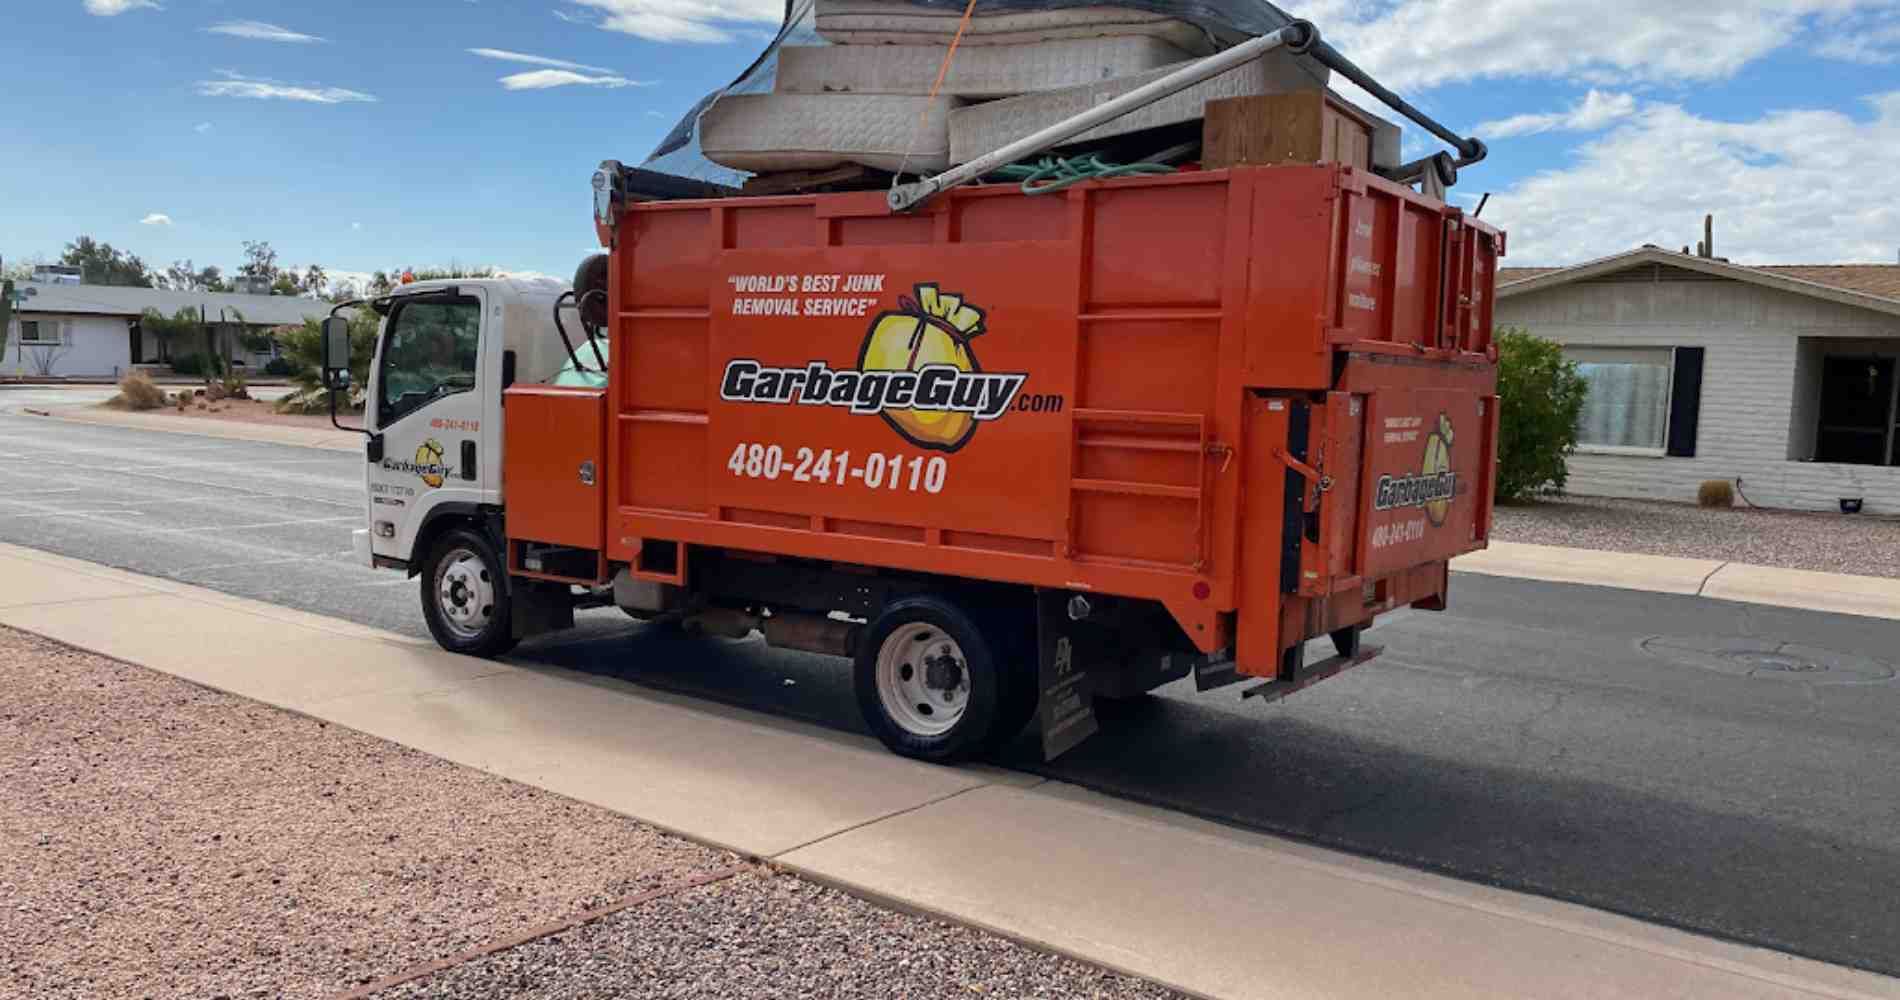 Curbside Trash Pickup in Peoria, AZ